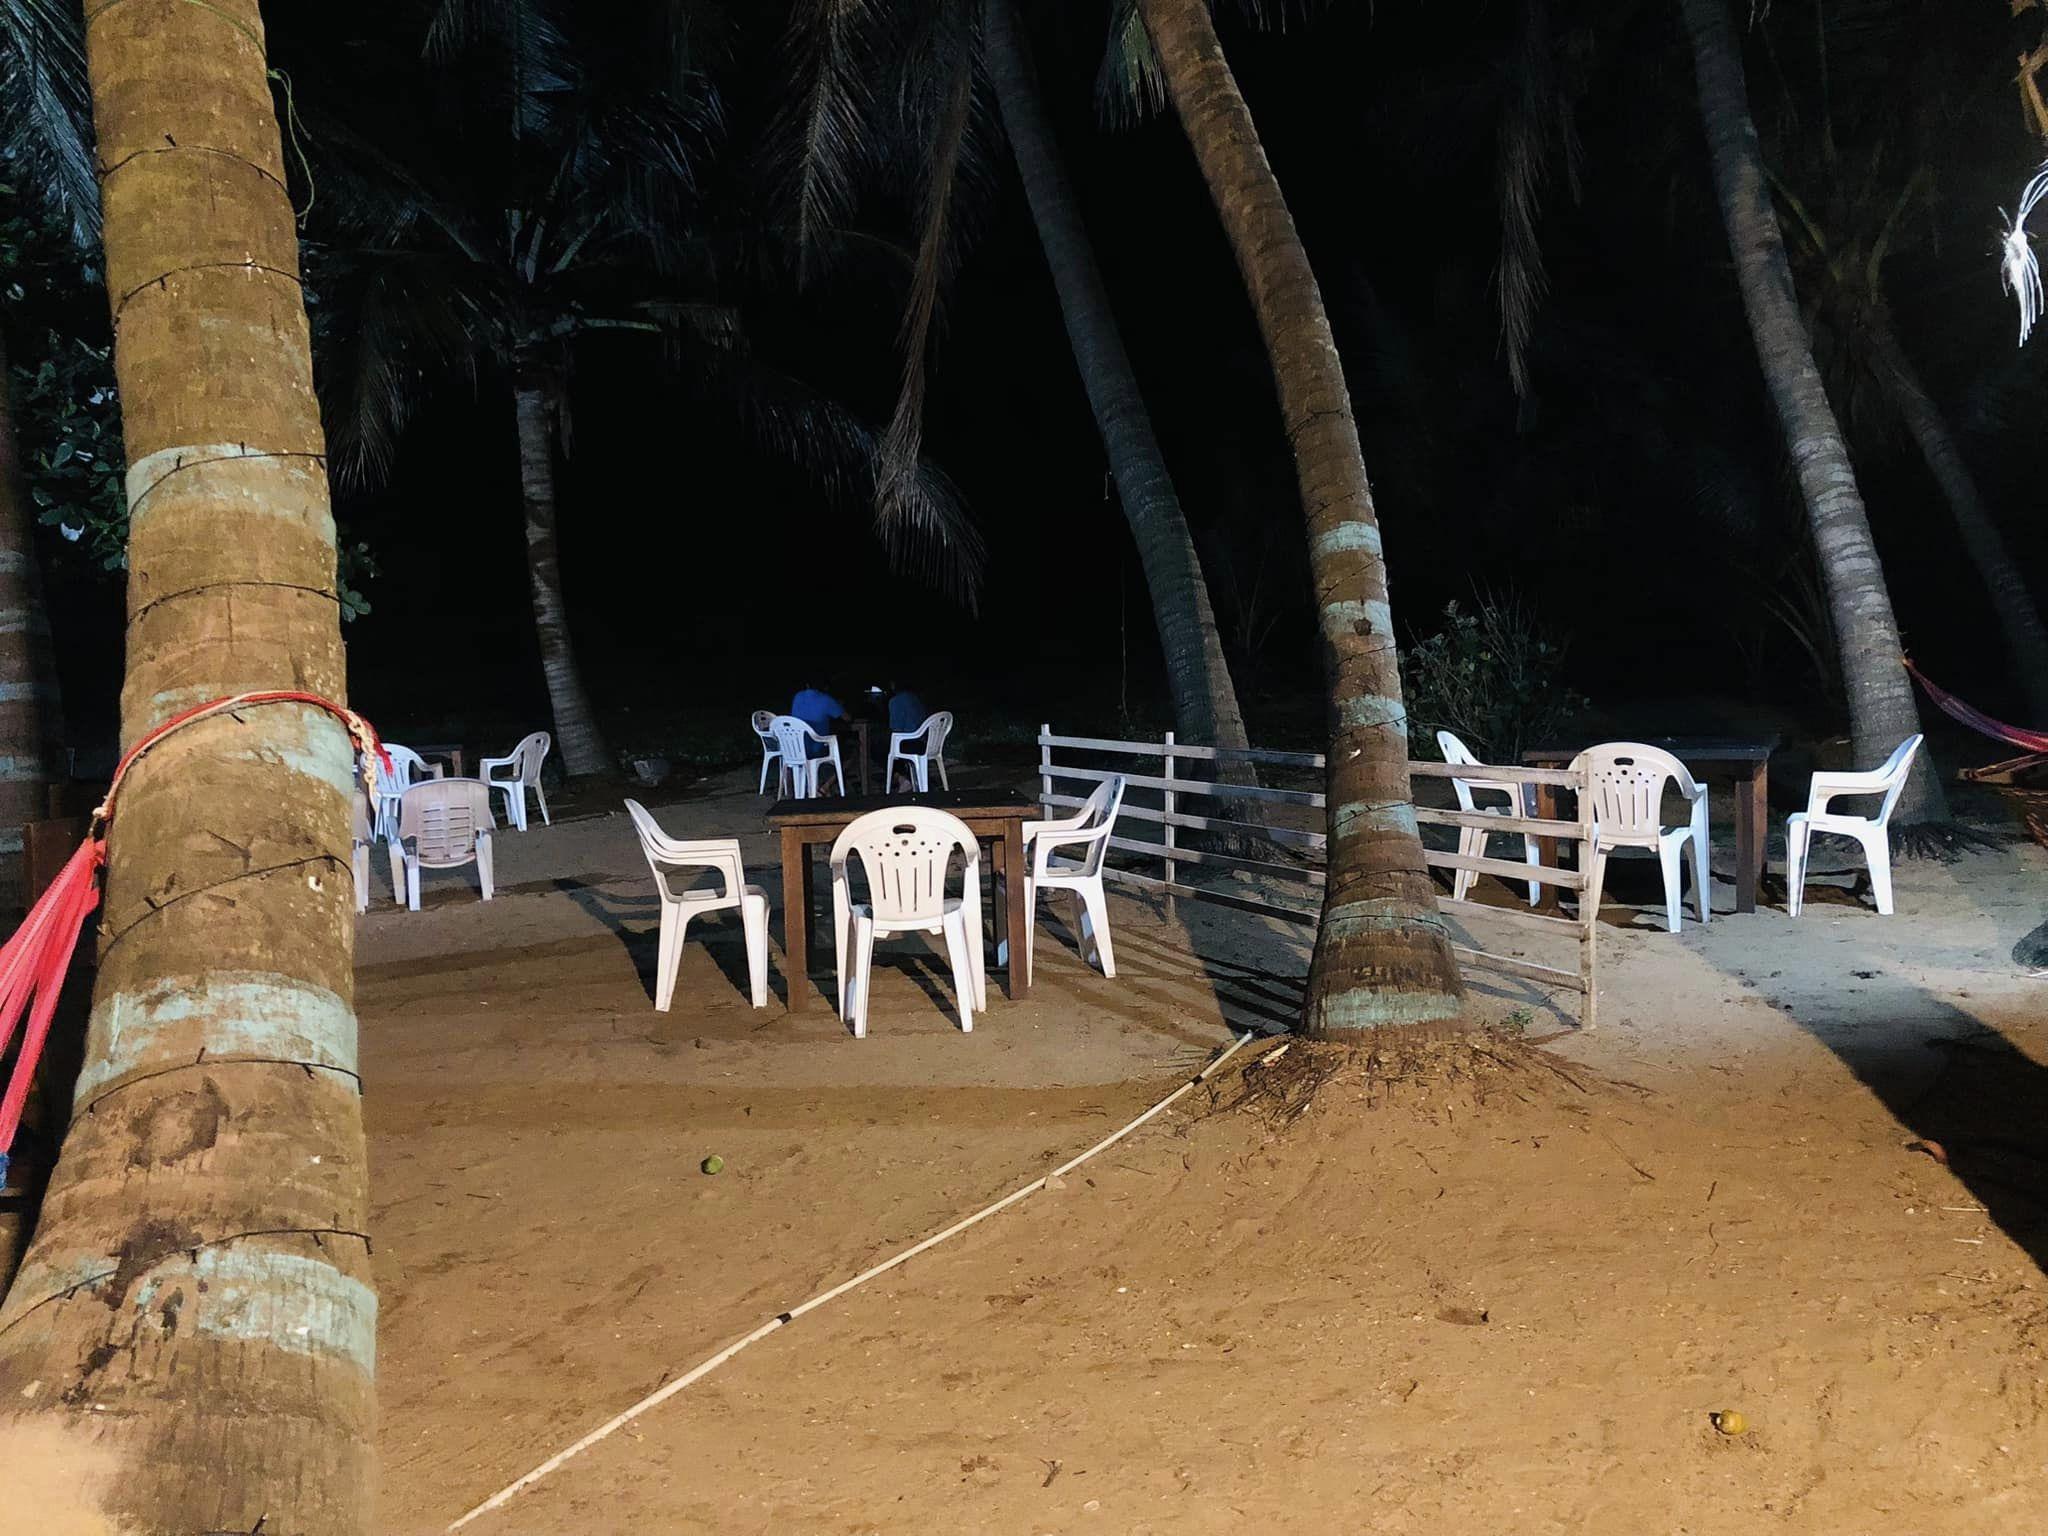 Туры в Honey Beach Negombo